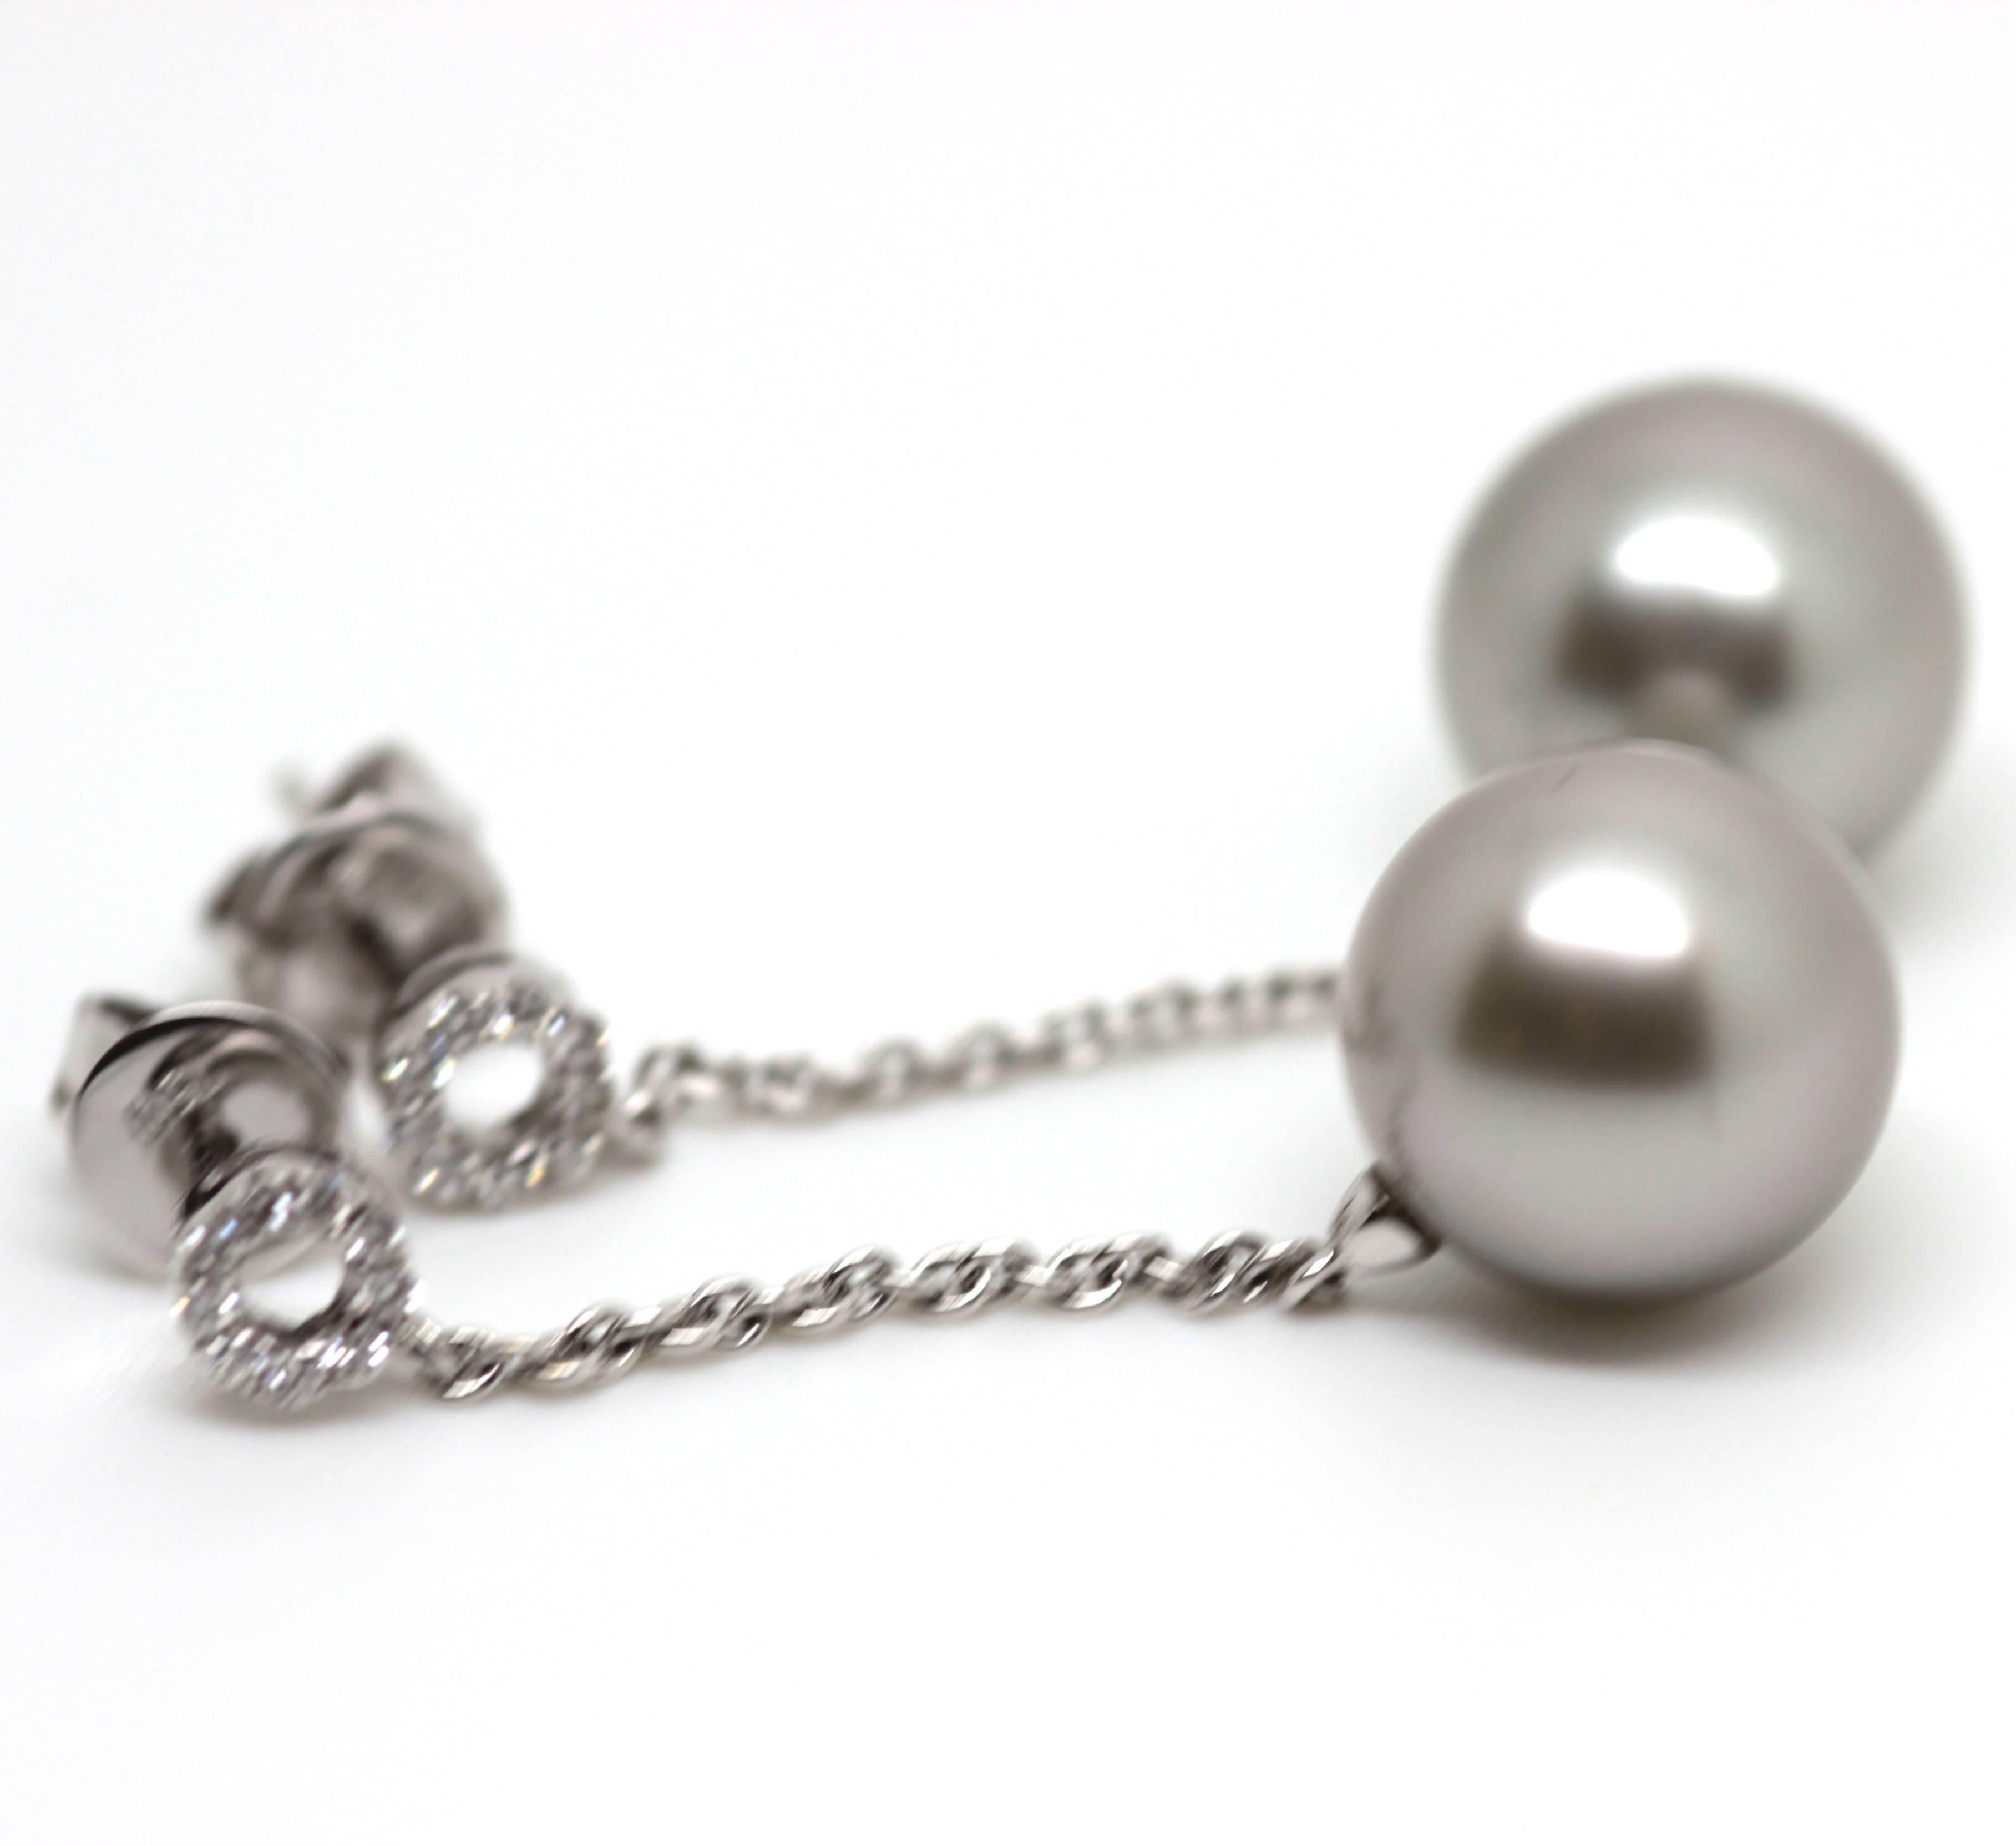 Tahitian grey pearl dangling earrings set in 18ct white gold with a diamond circular top. Circa: New